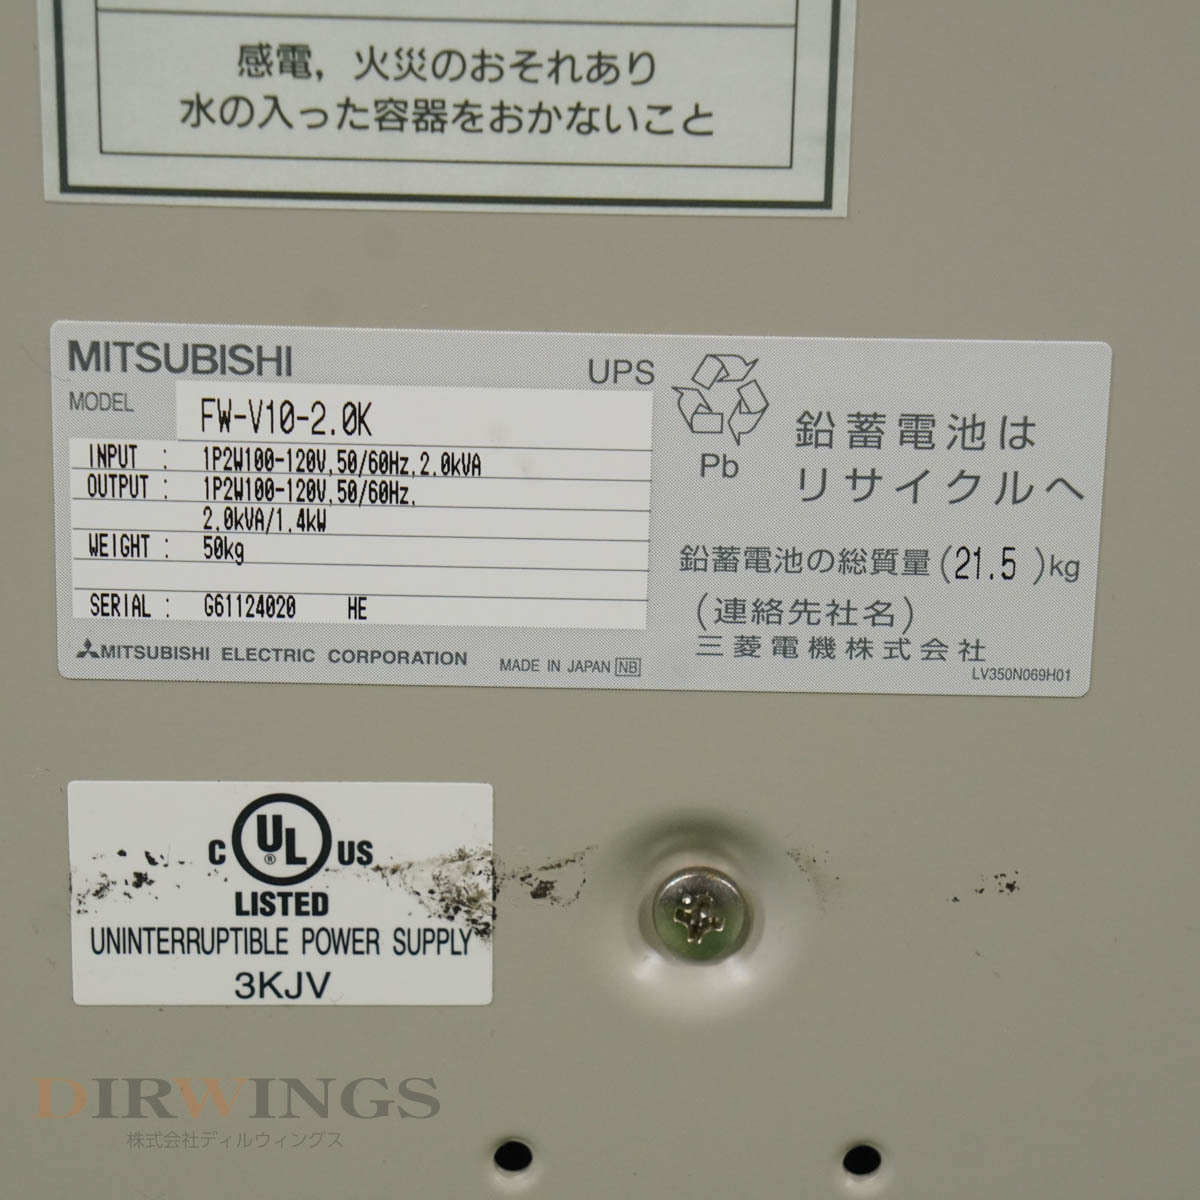 [PG] 8日保証 FW-V10-2.0K FREQUPS-V MITSUBISHI 三菱電機 UPS 無停電電源装置[05791-1231]_画像6